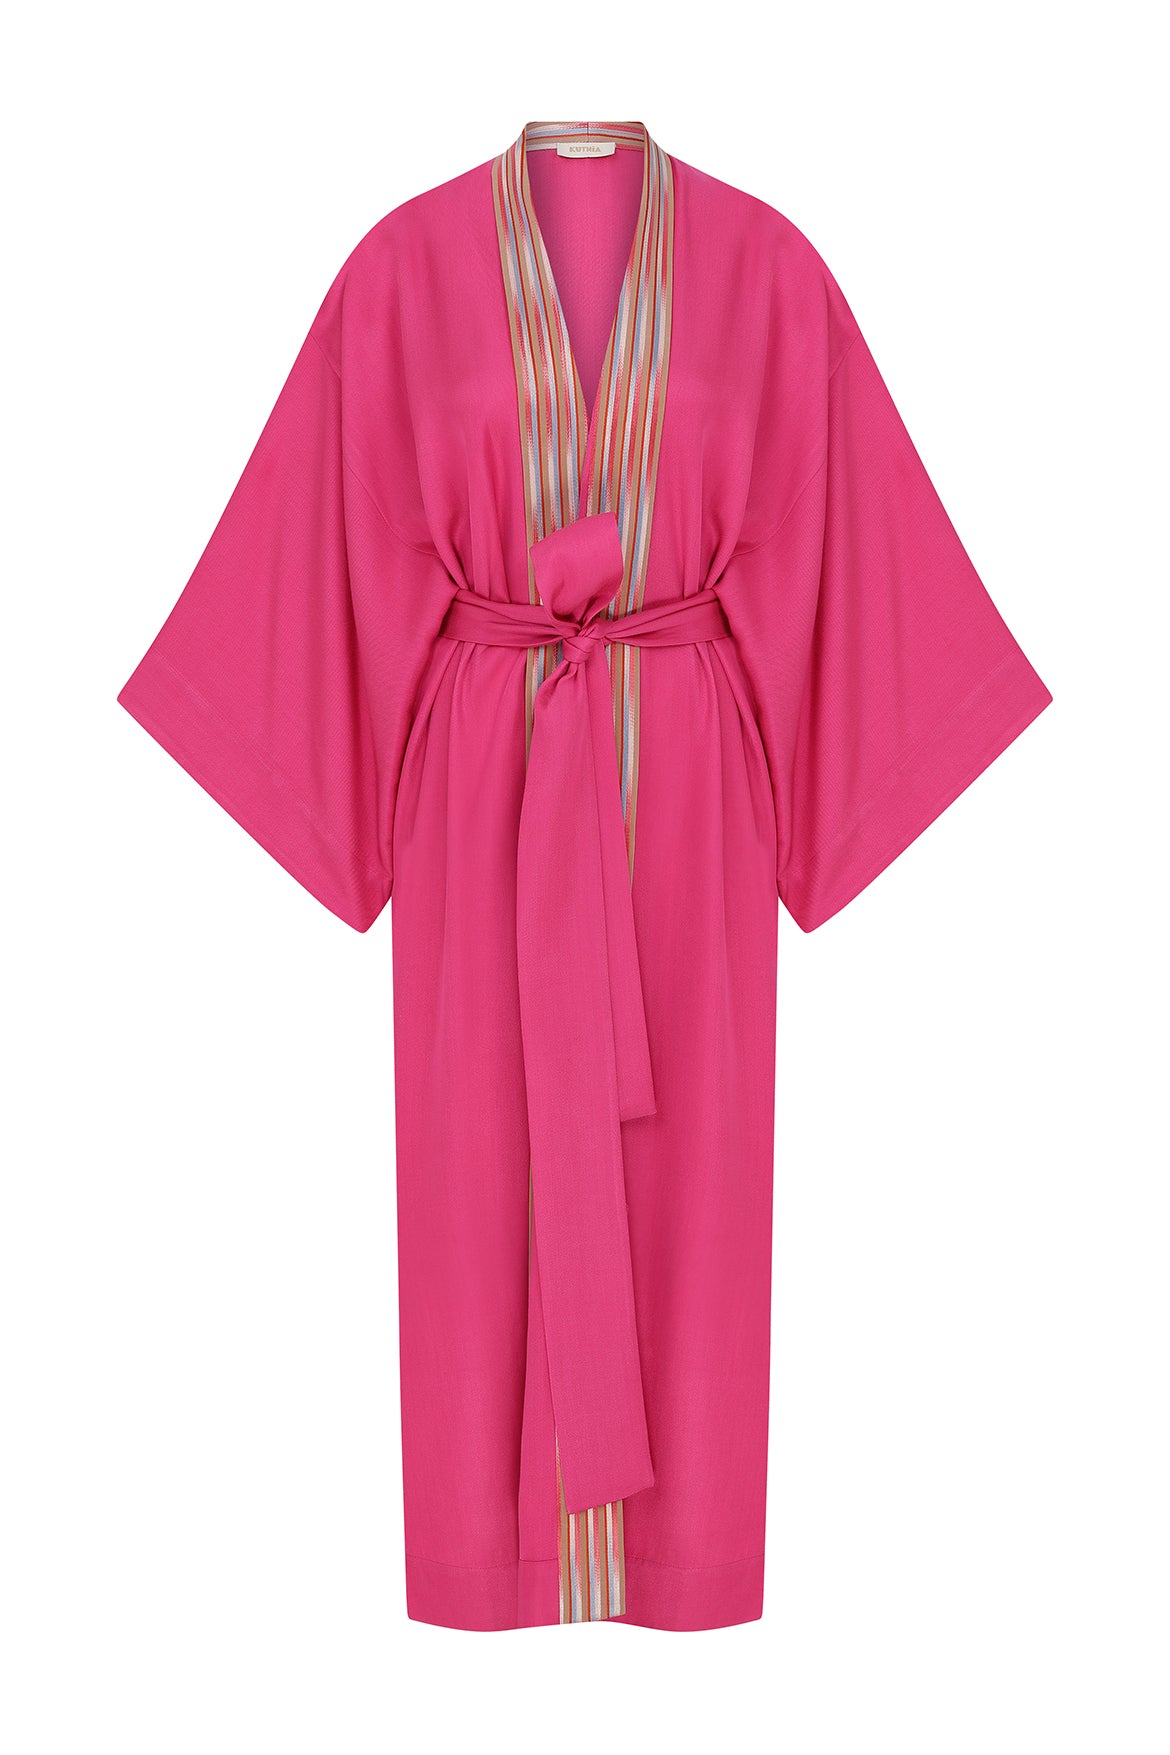 Classic Pink Kimono